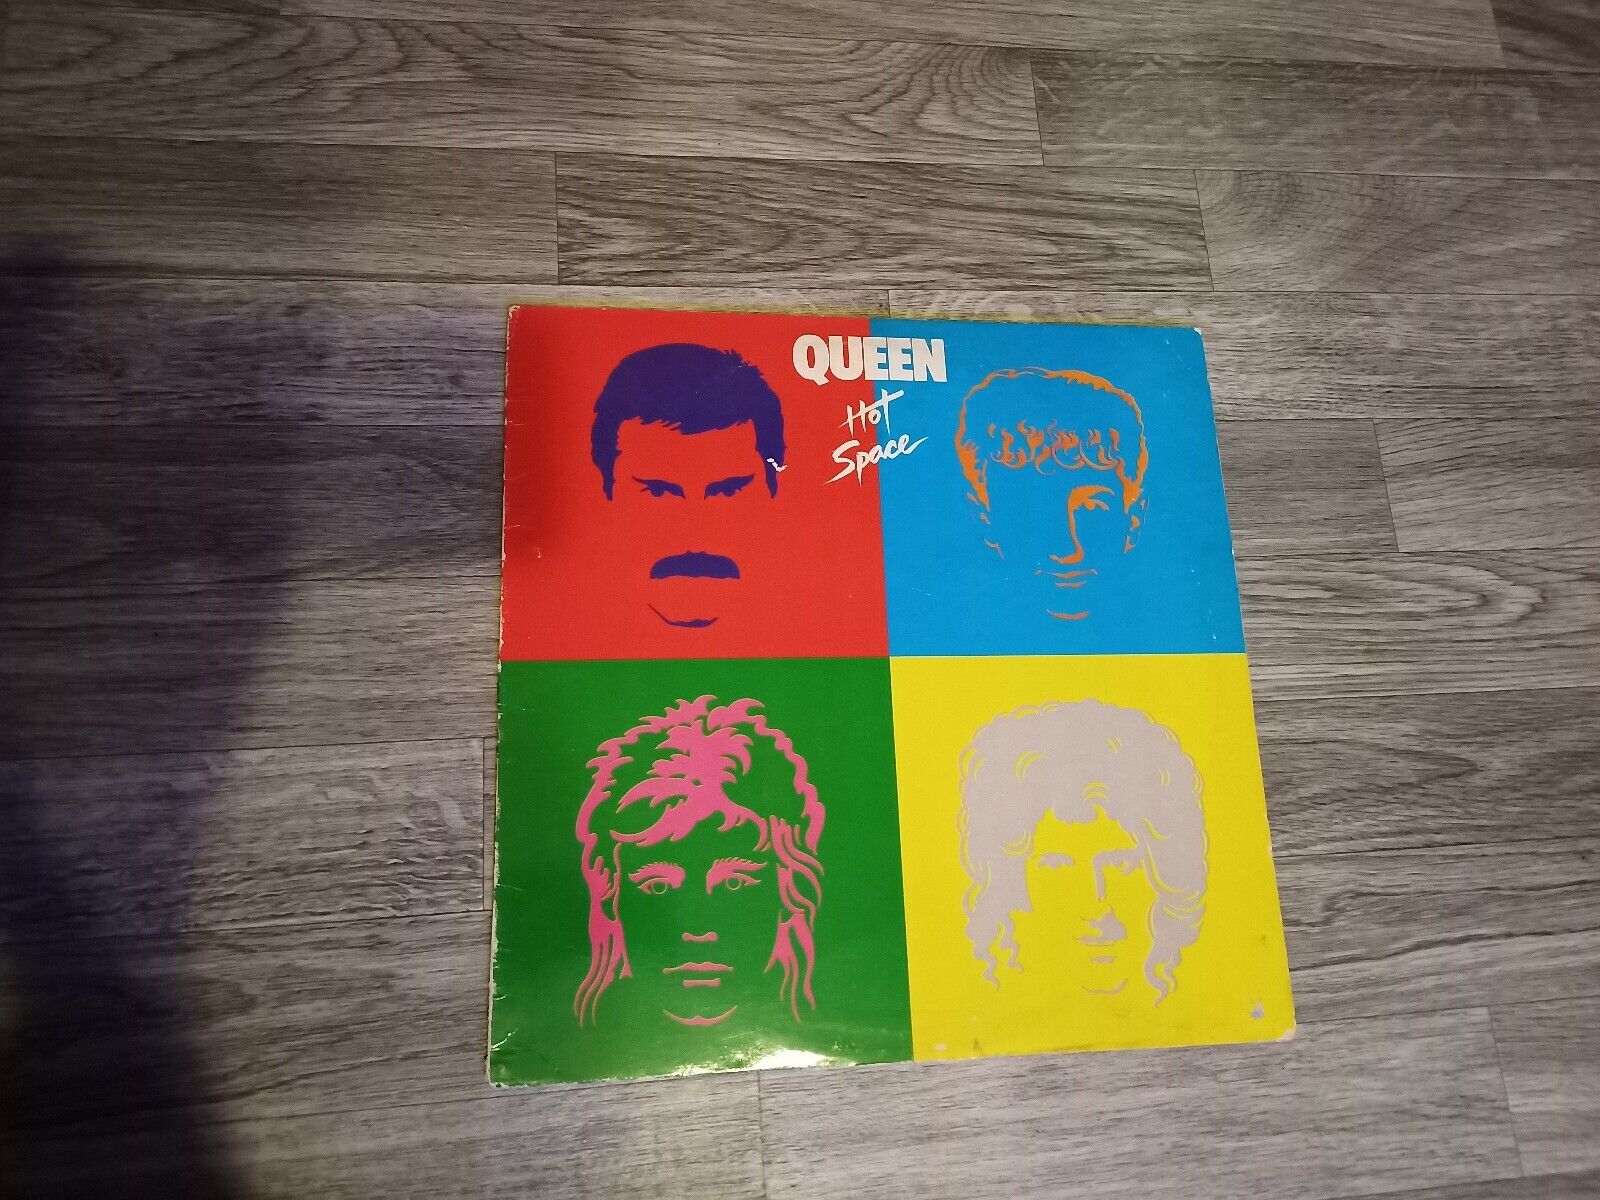 Queen Hot Space Vinyl Record LP VG/VG+